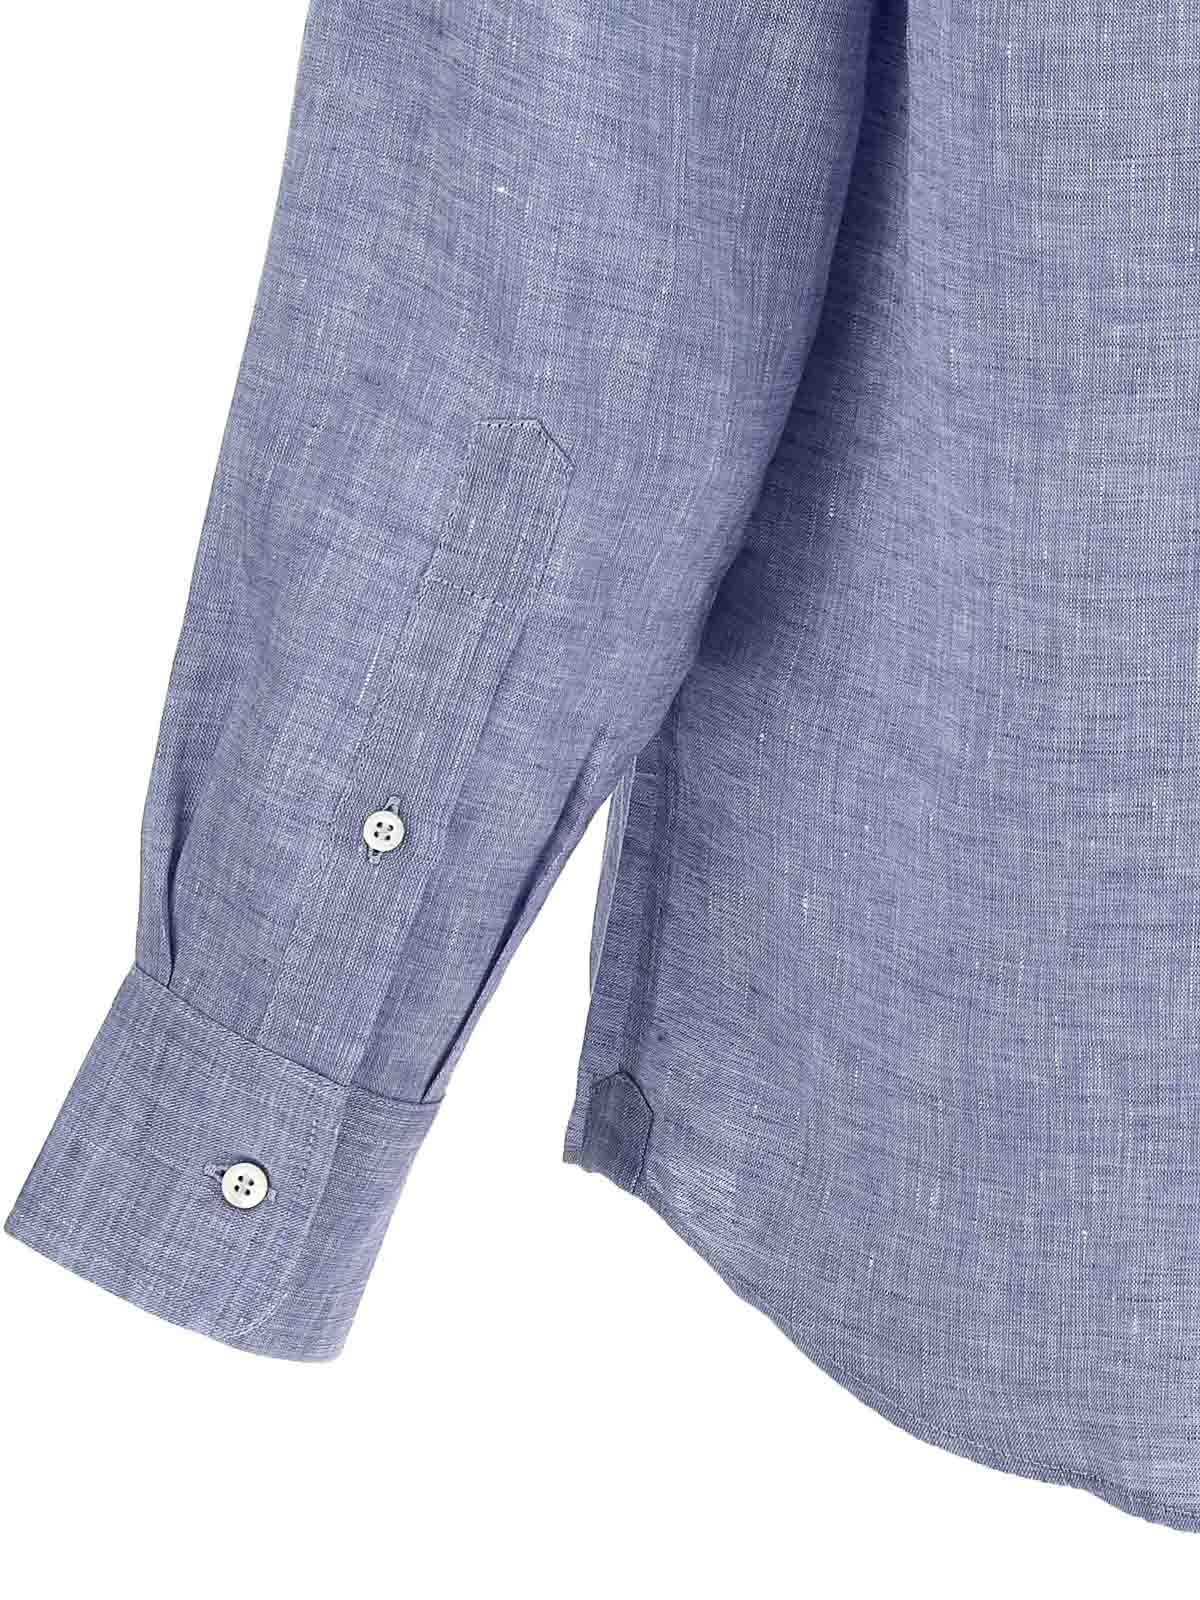 Shop Brunello Cucinelli Linen Shirt Button In Azul Claro